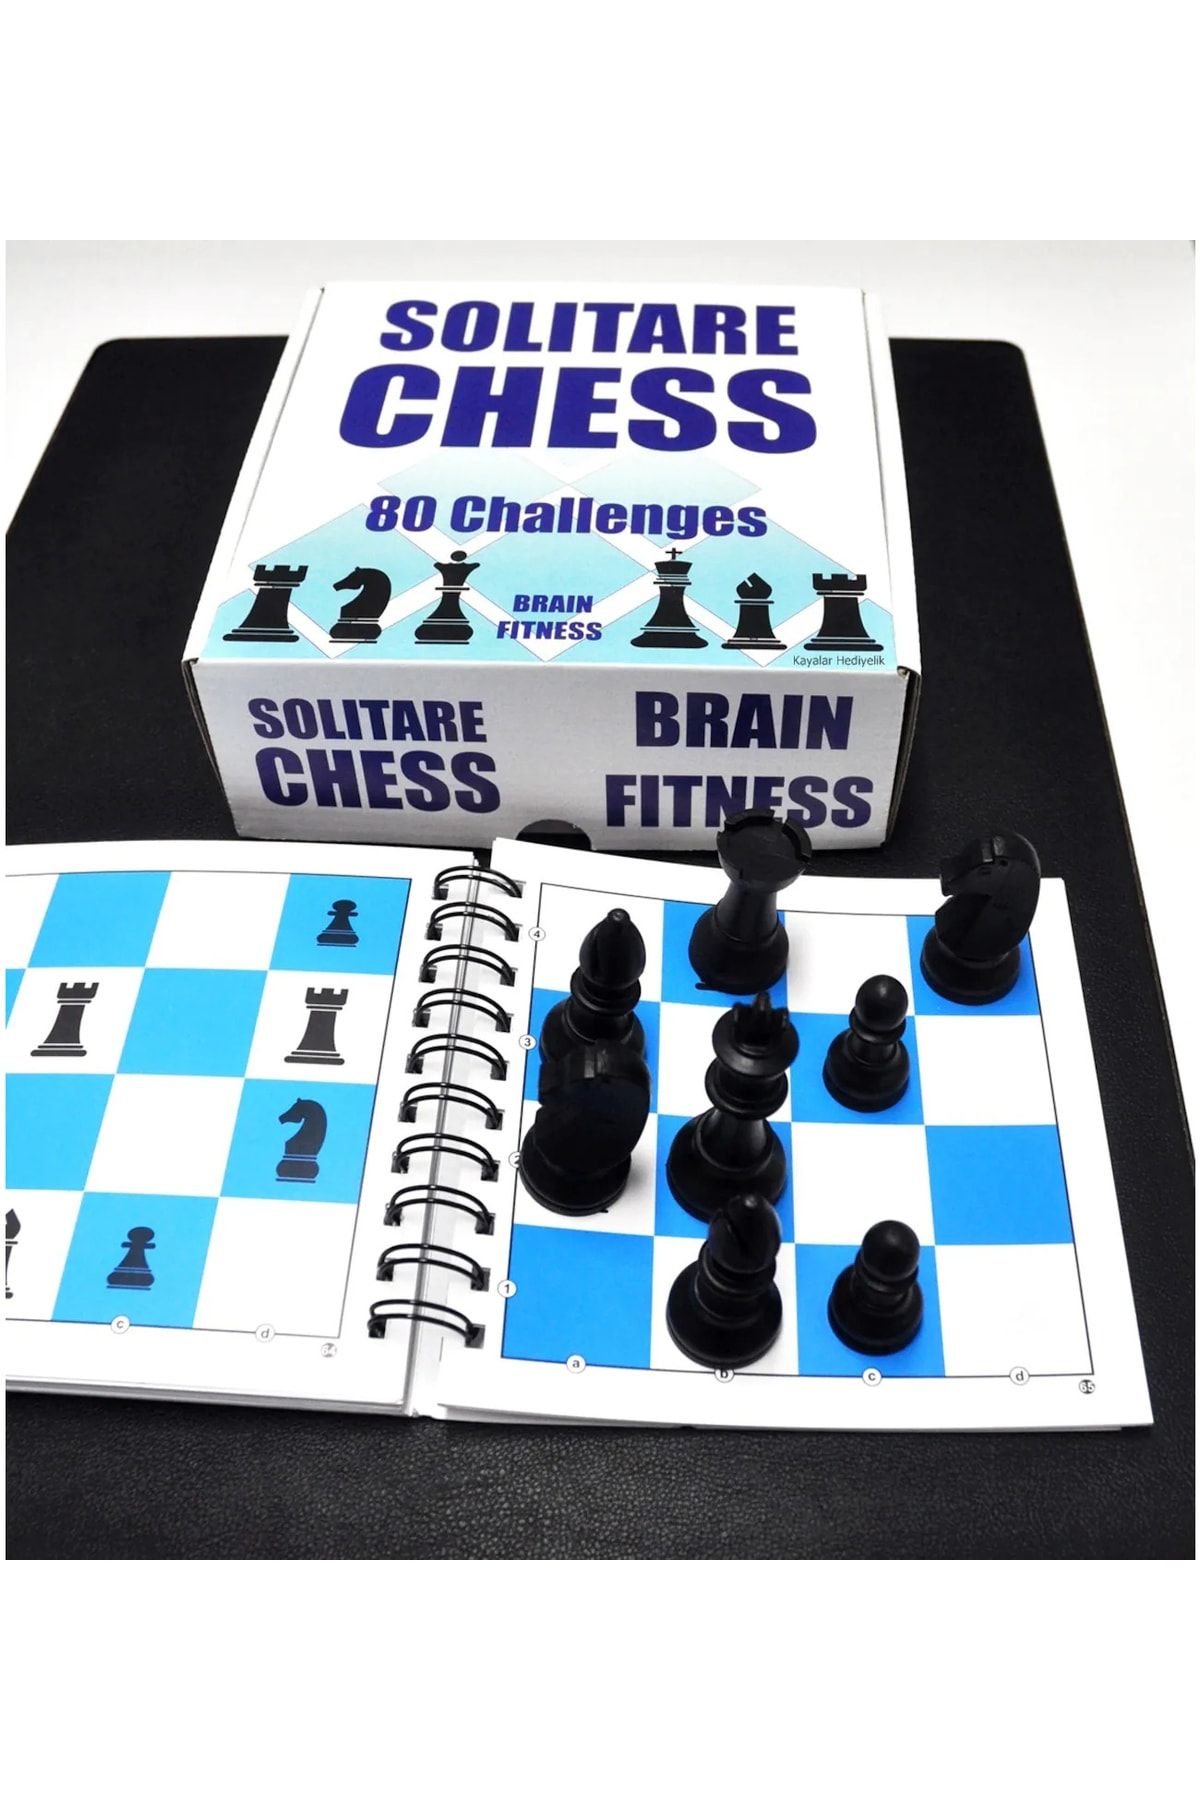 e-life Tek Kişilik Satranç Seti Beyin Jimnastiği Satranç Eğitim Paketi 80 Görev Solitare Chess Brain Fitnes